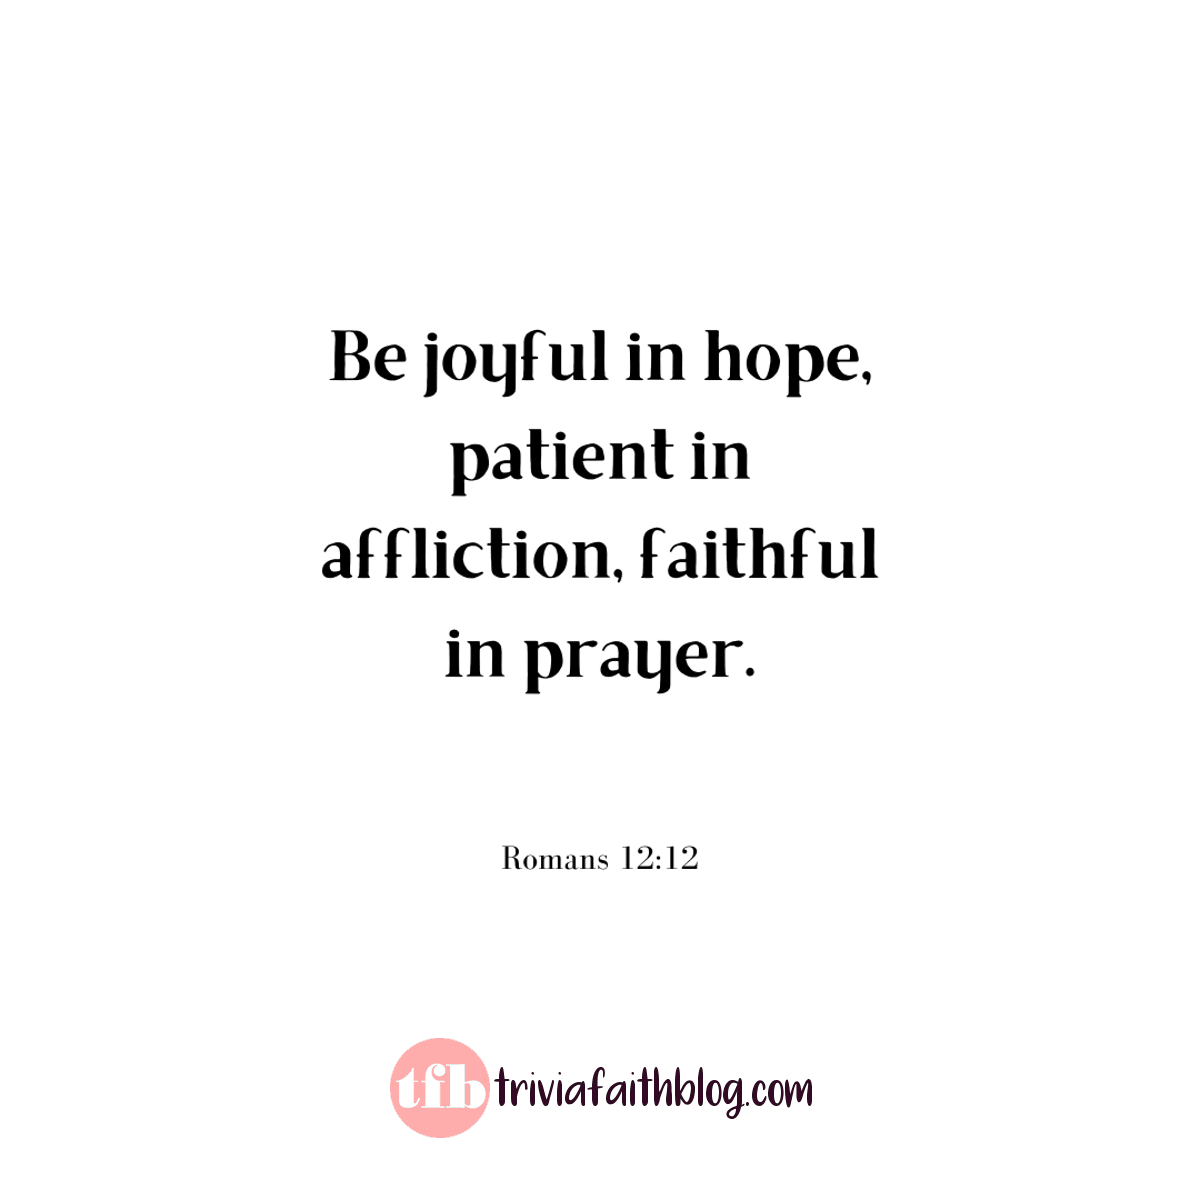 Be joyful in hope, patient in affliction, faithful in prayer